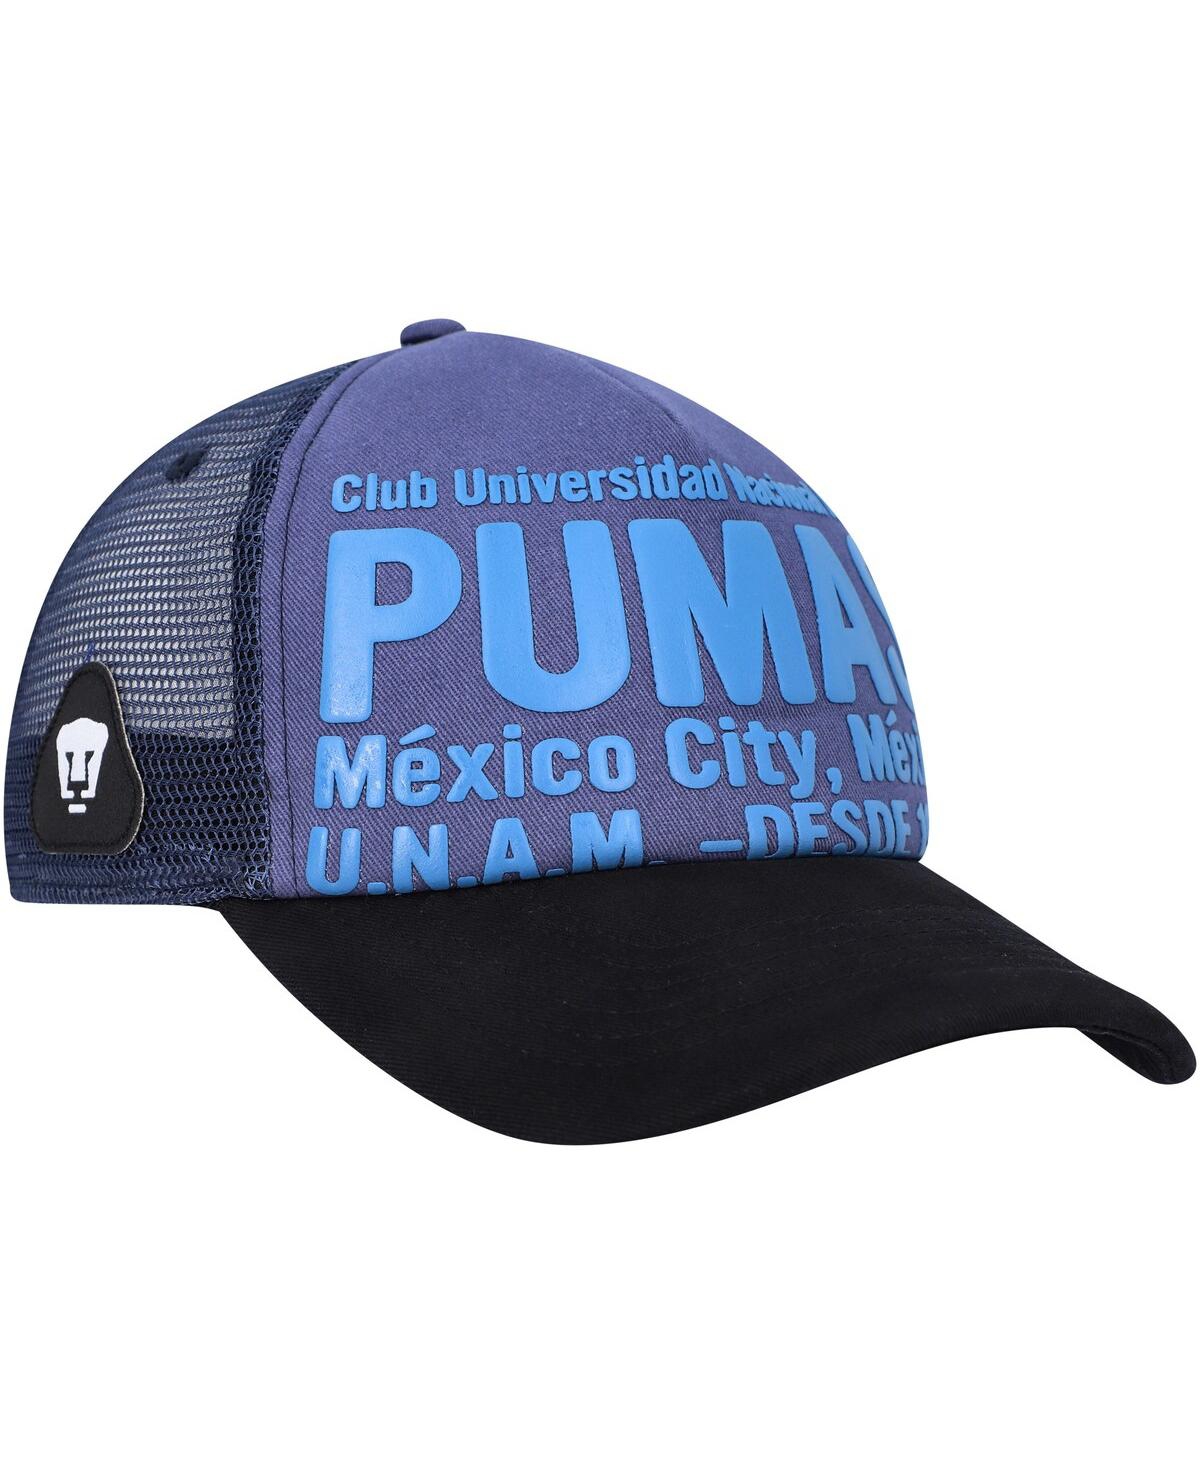 Fan Ink Men's Navy Pumas Club Gold Adjustable Hat